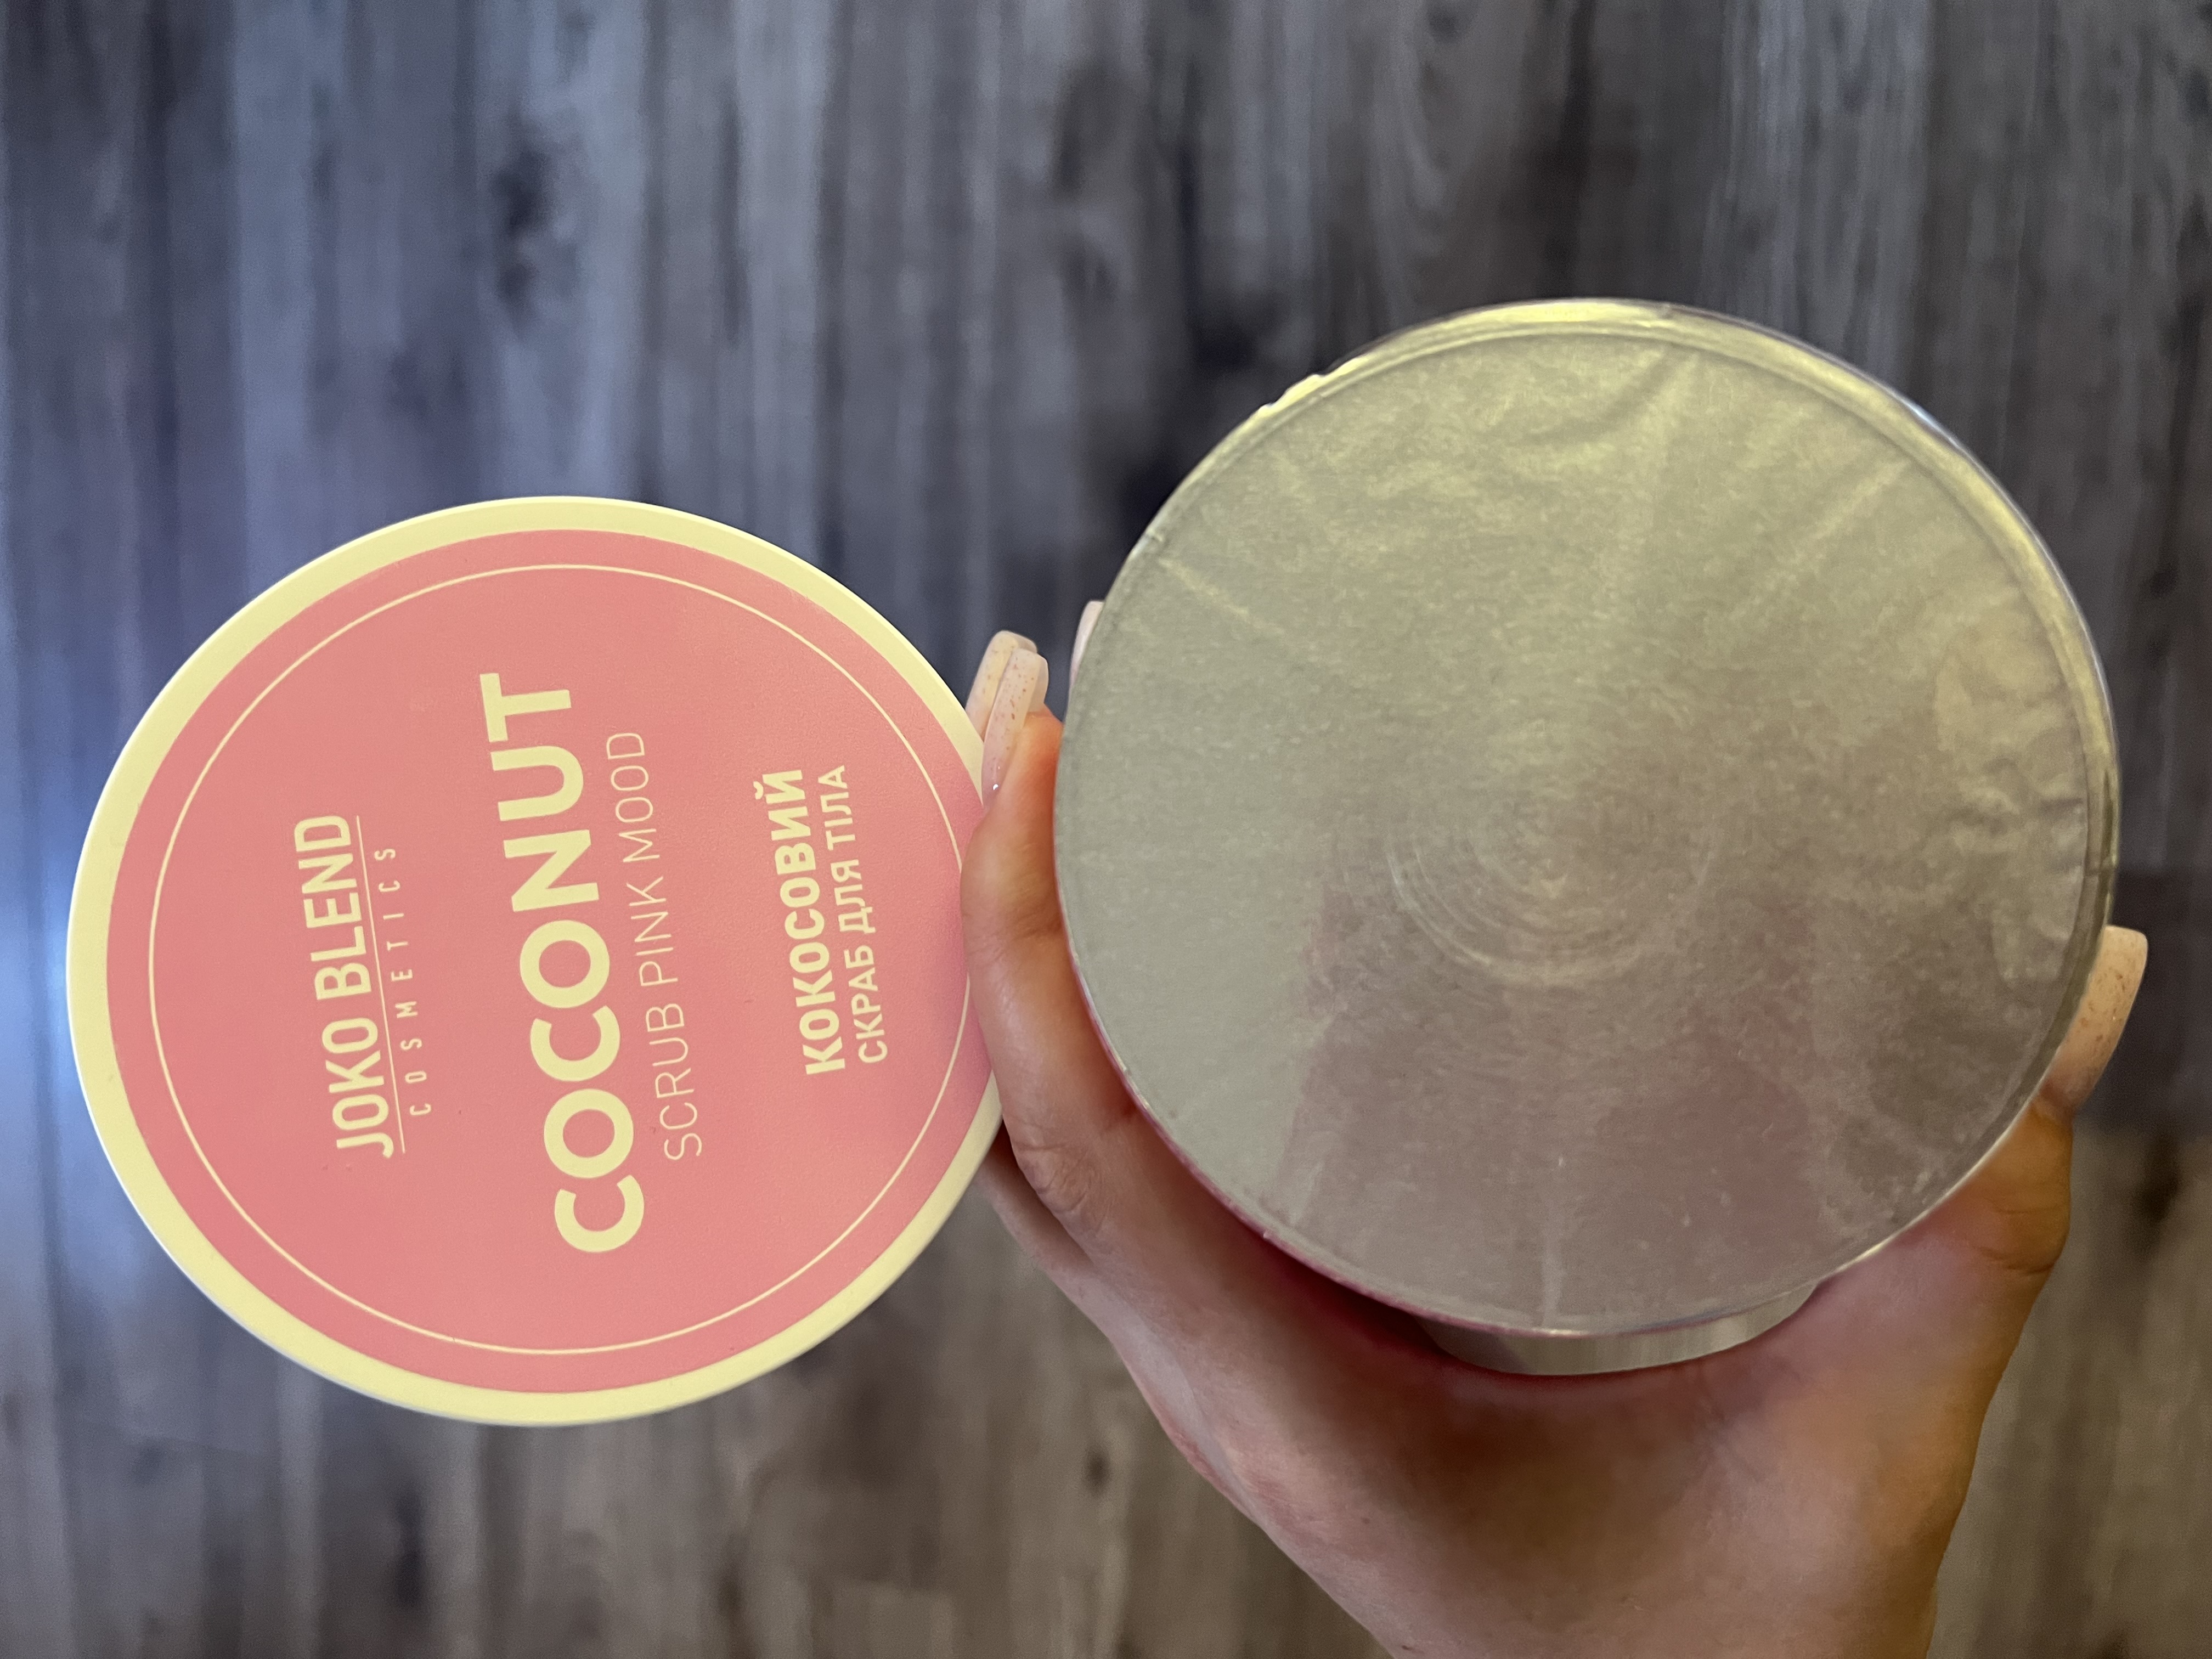 Joko Blend Coconut Scrub Pink Mood